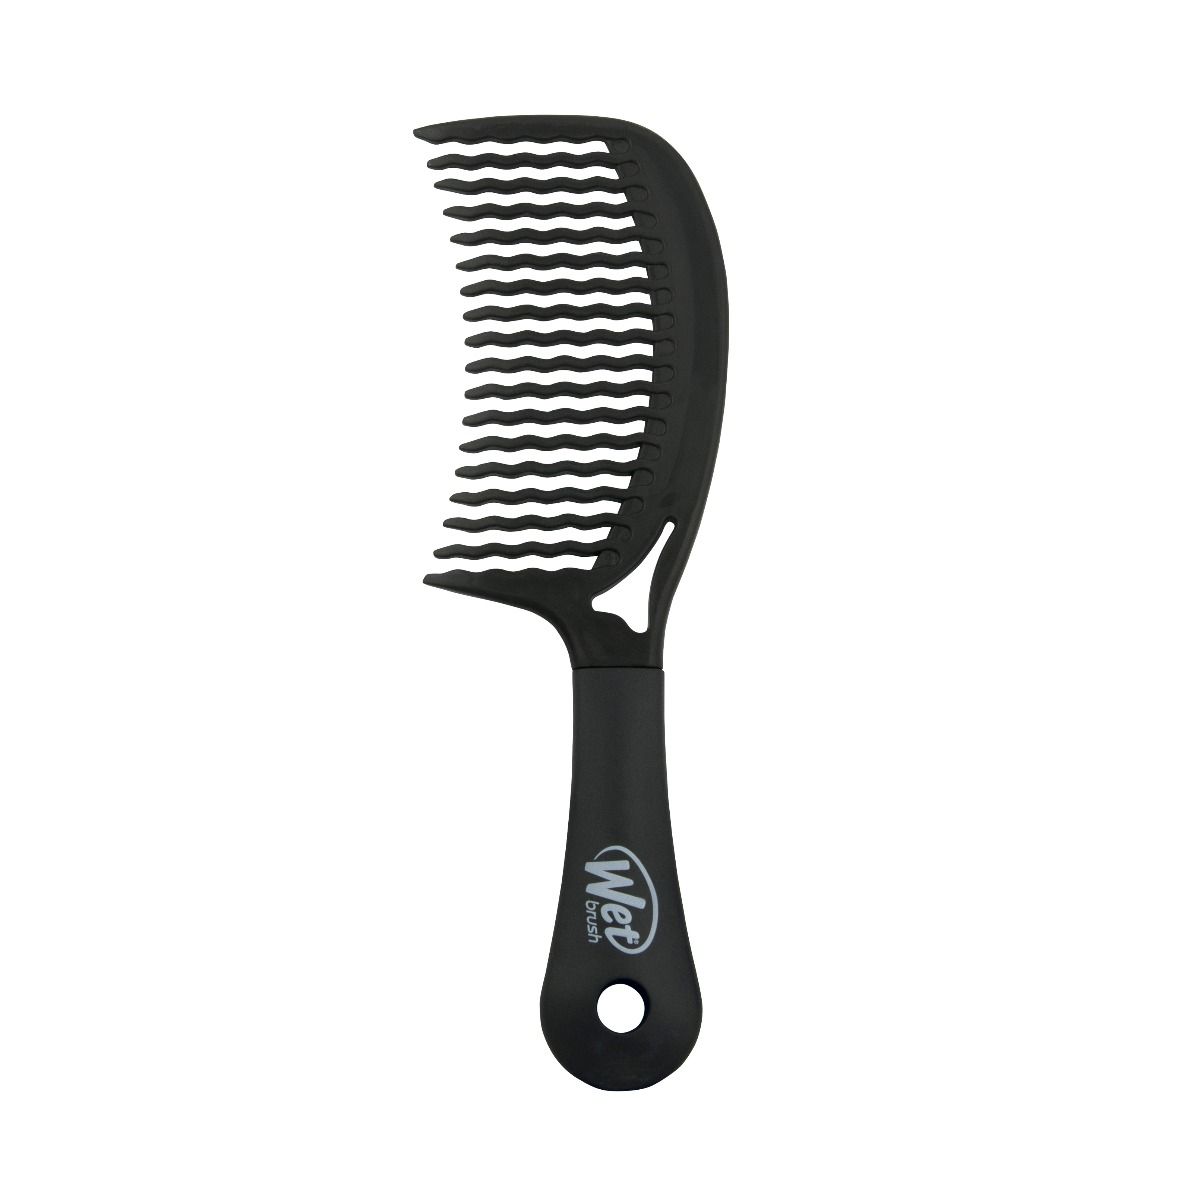 Wet Brush Detangling Hair COMB BLACK WBDHC-B